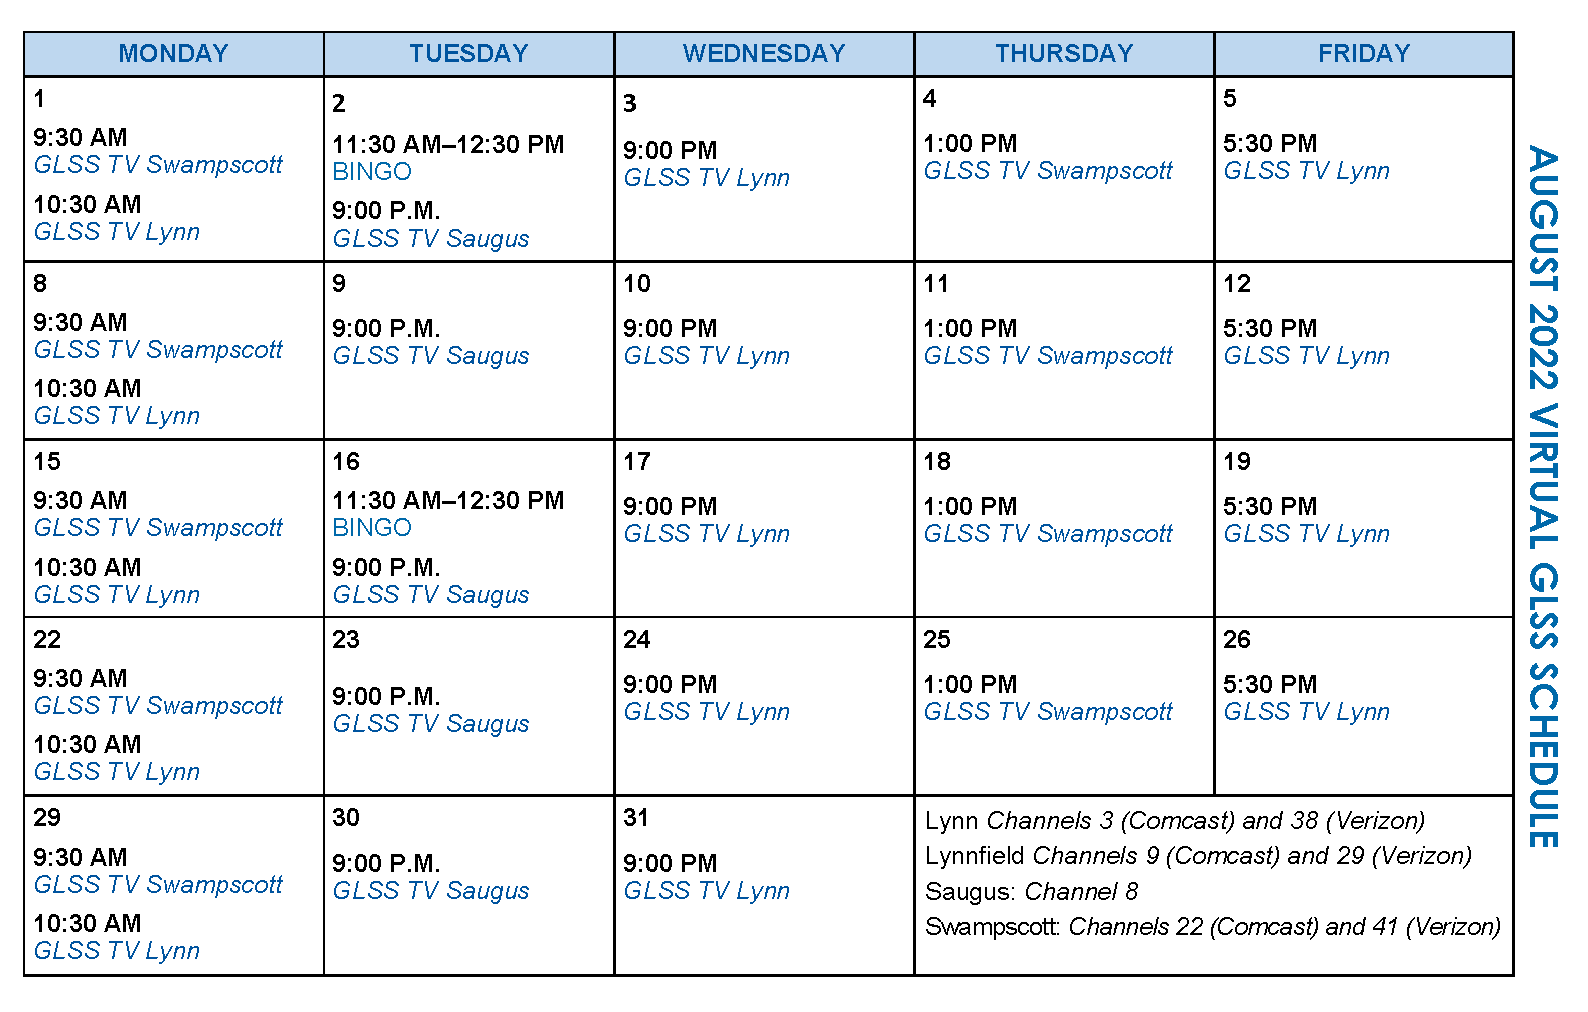 Virtual GLSS schedule